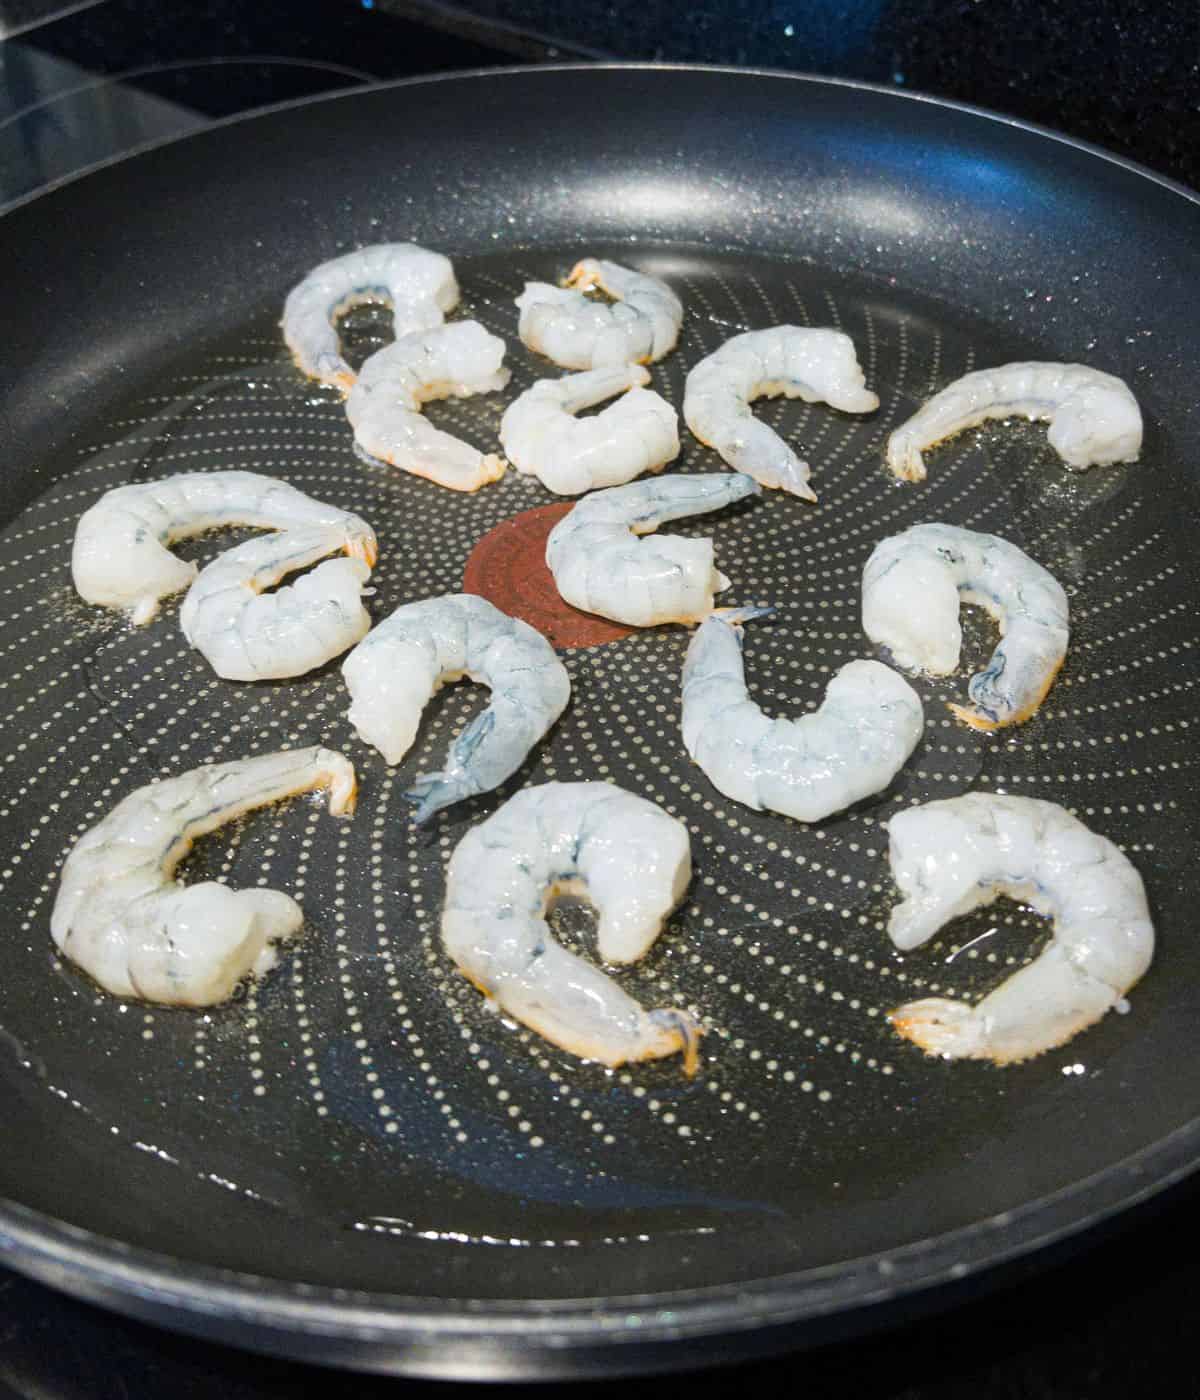 Raw jumbo king prawns frying in a pan.